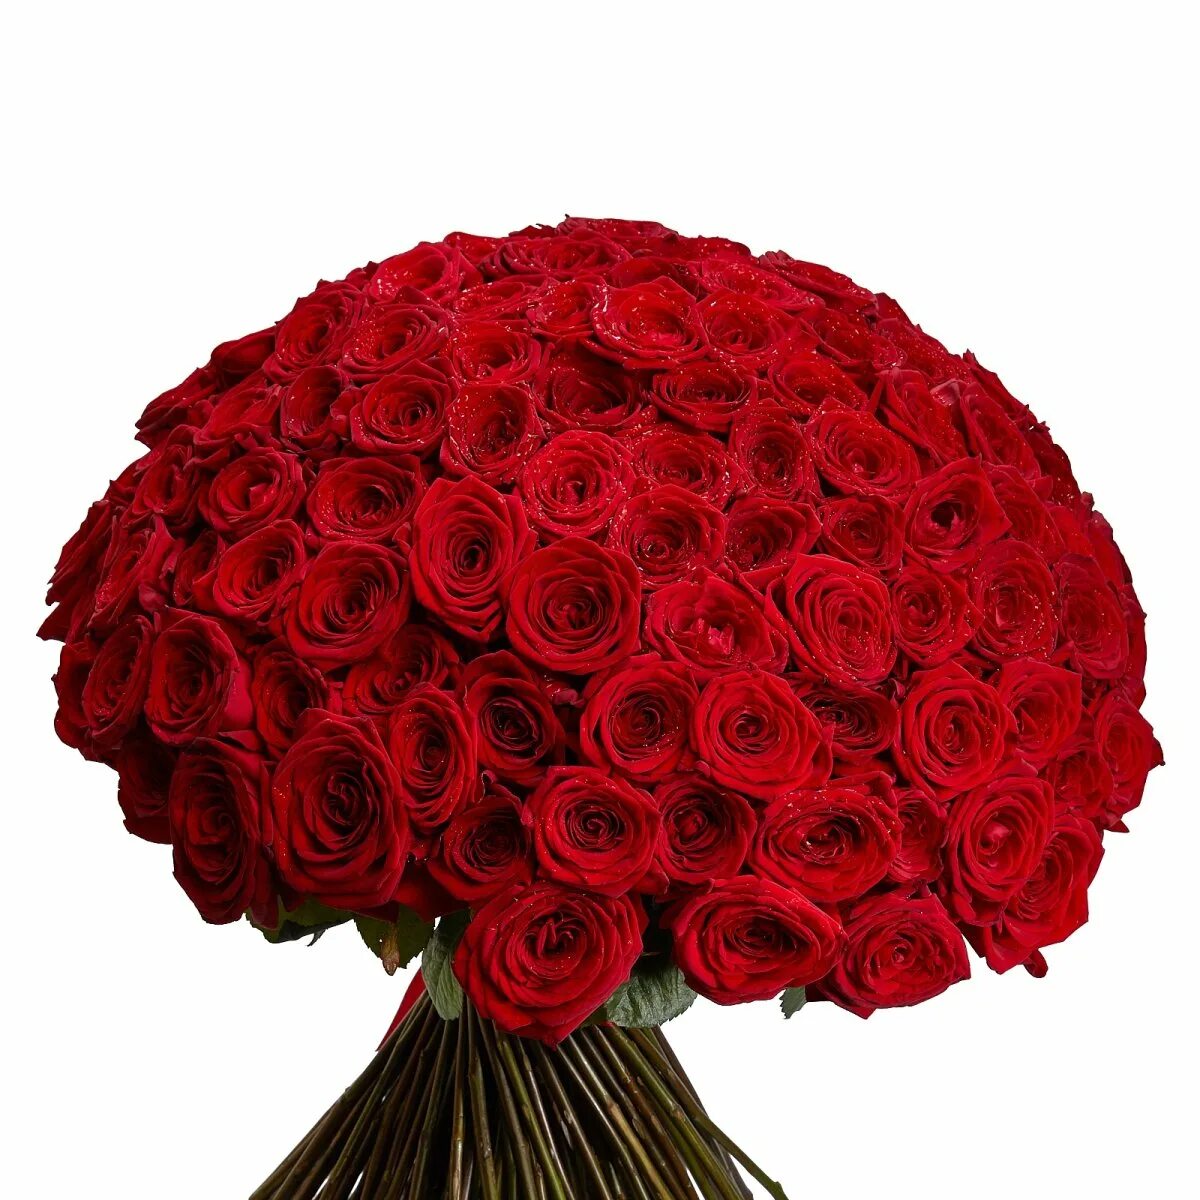 Букет красных роз. Шикарный букет красных роз. Букет роз огромный. Огромный букет красных роз. В букете было красных роз